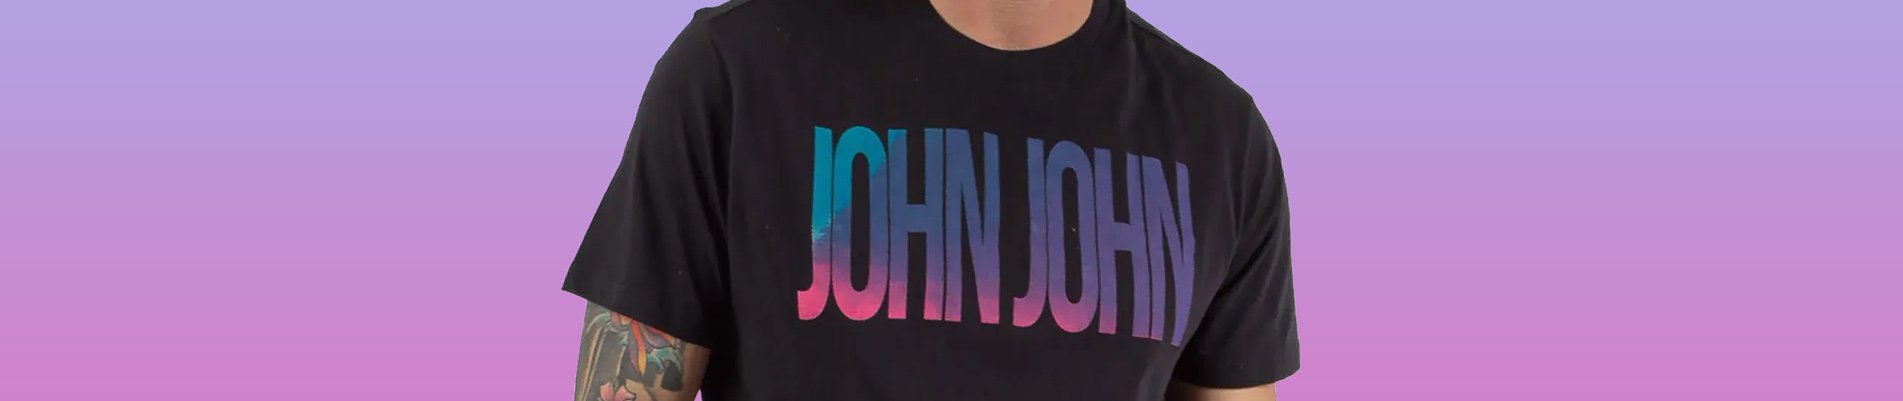 background-marca-john-john